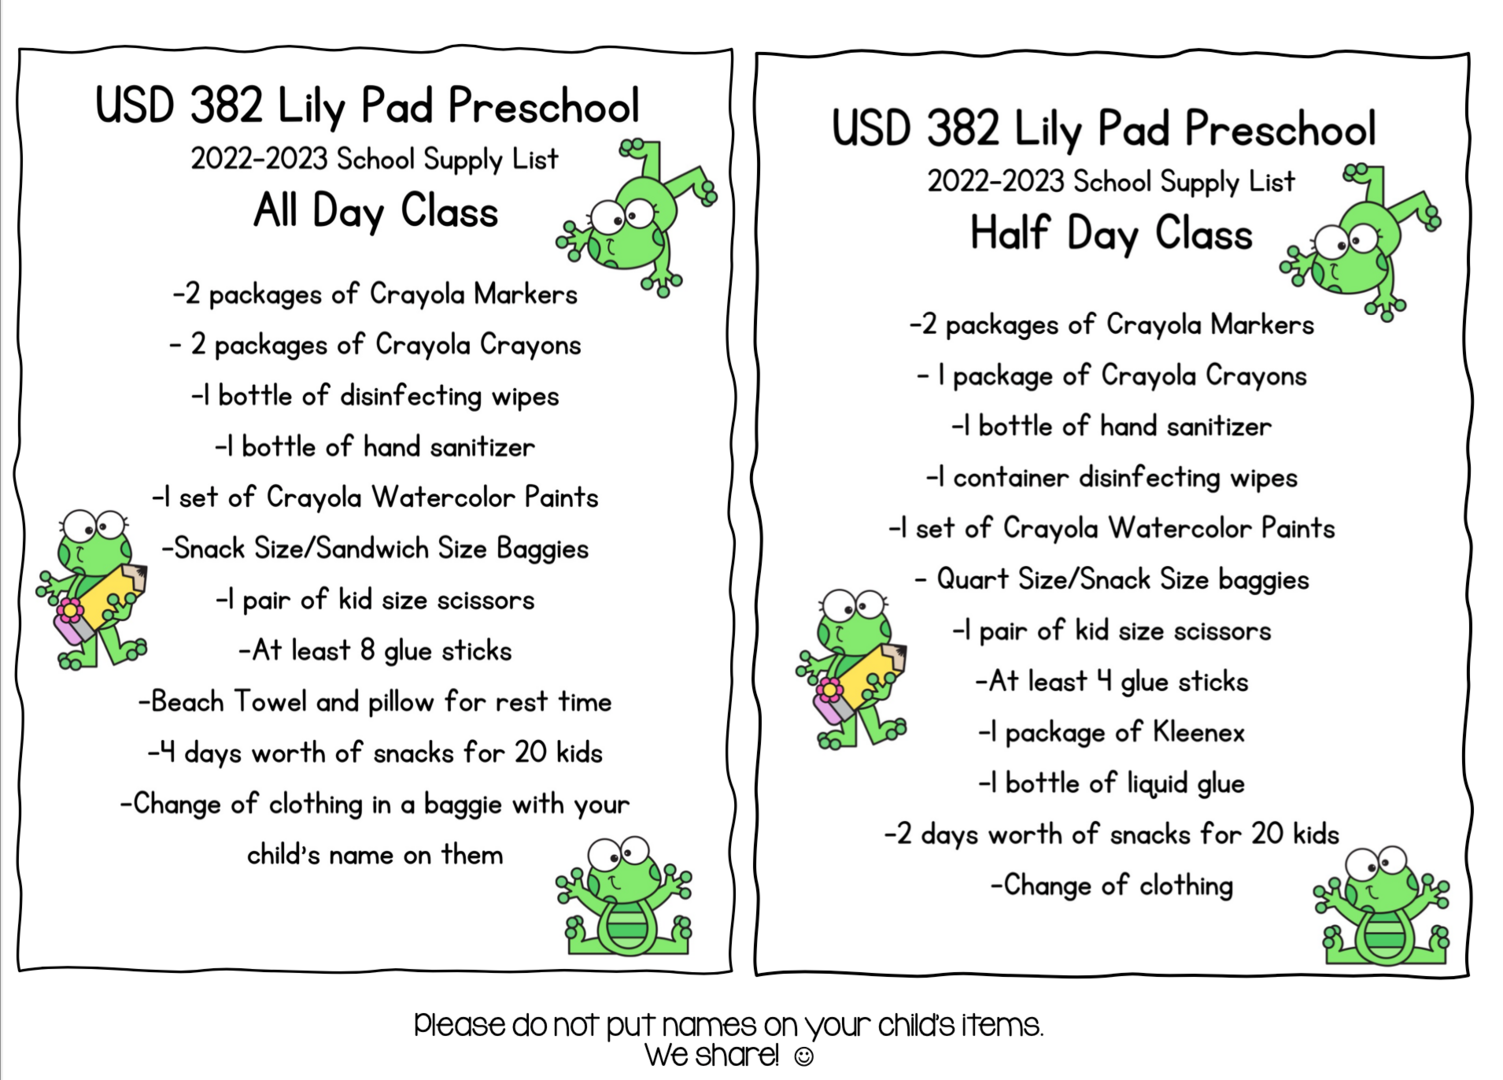 Lily Pad PreSchool 22-23